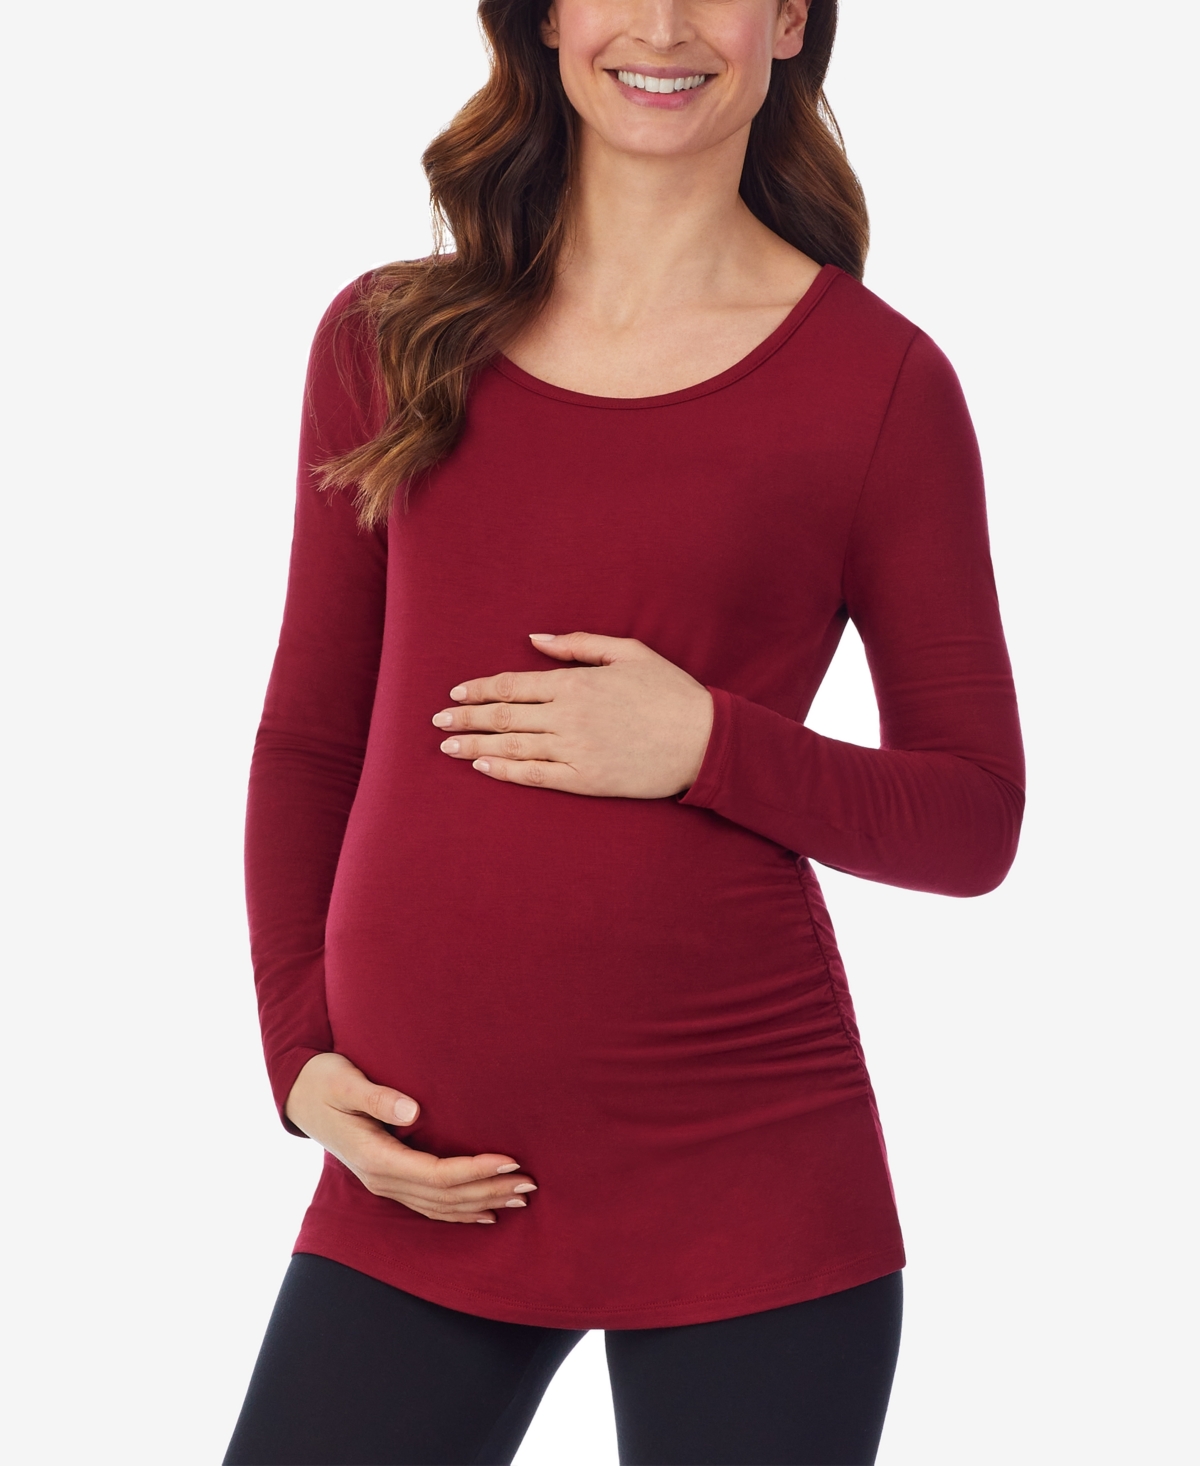 Women's Softwear Long-Sleeve Maternity Top - Rhubarb